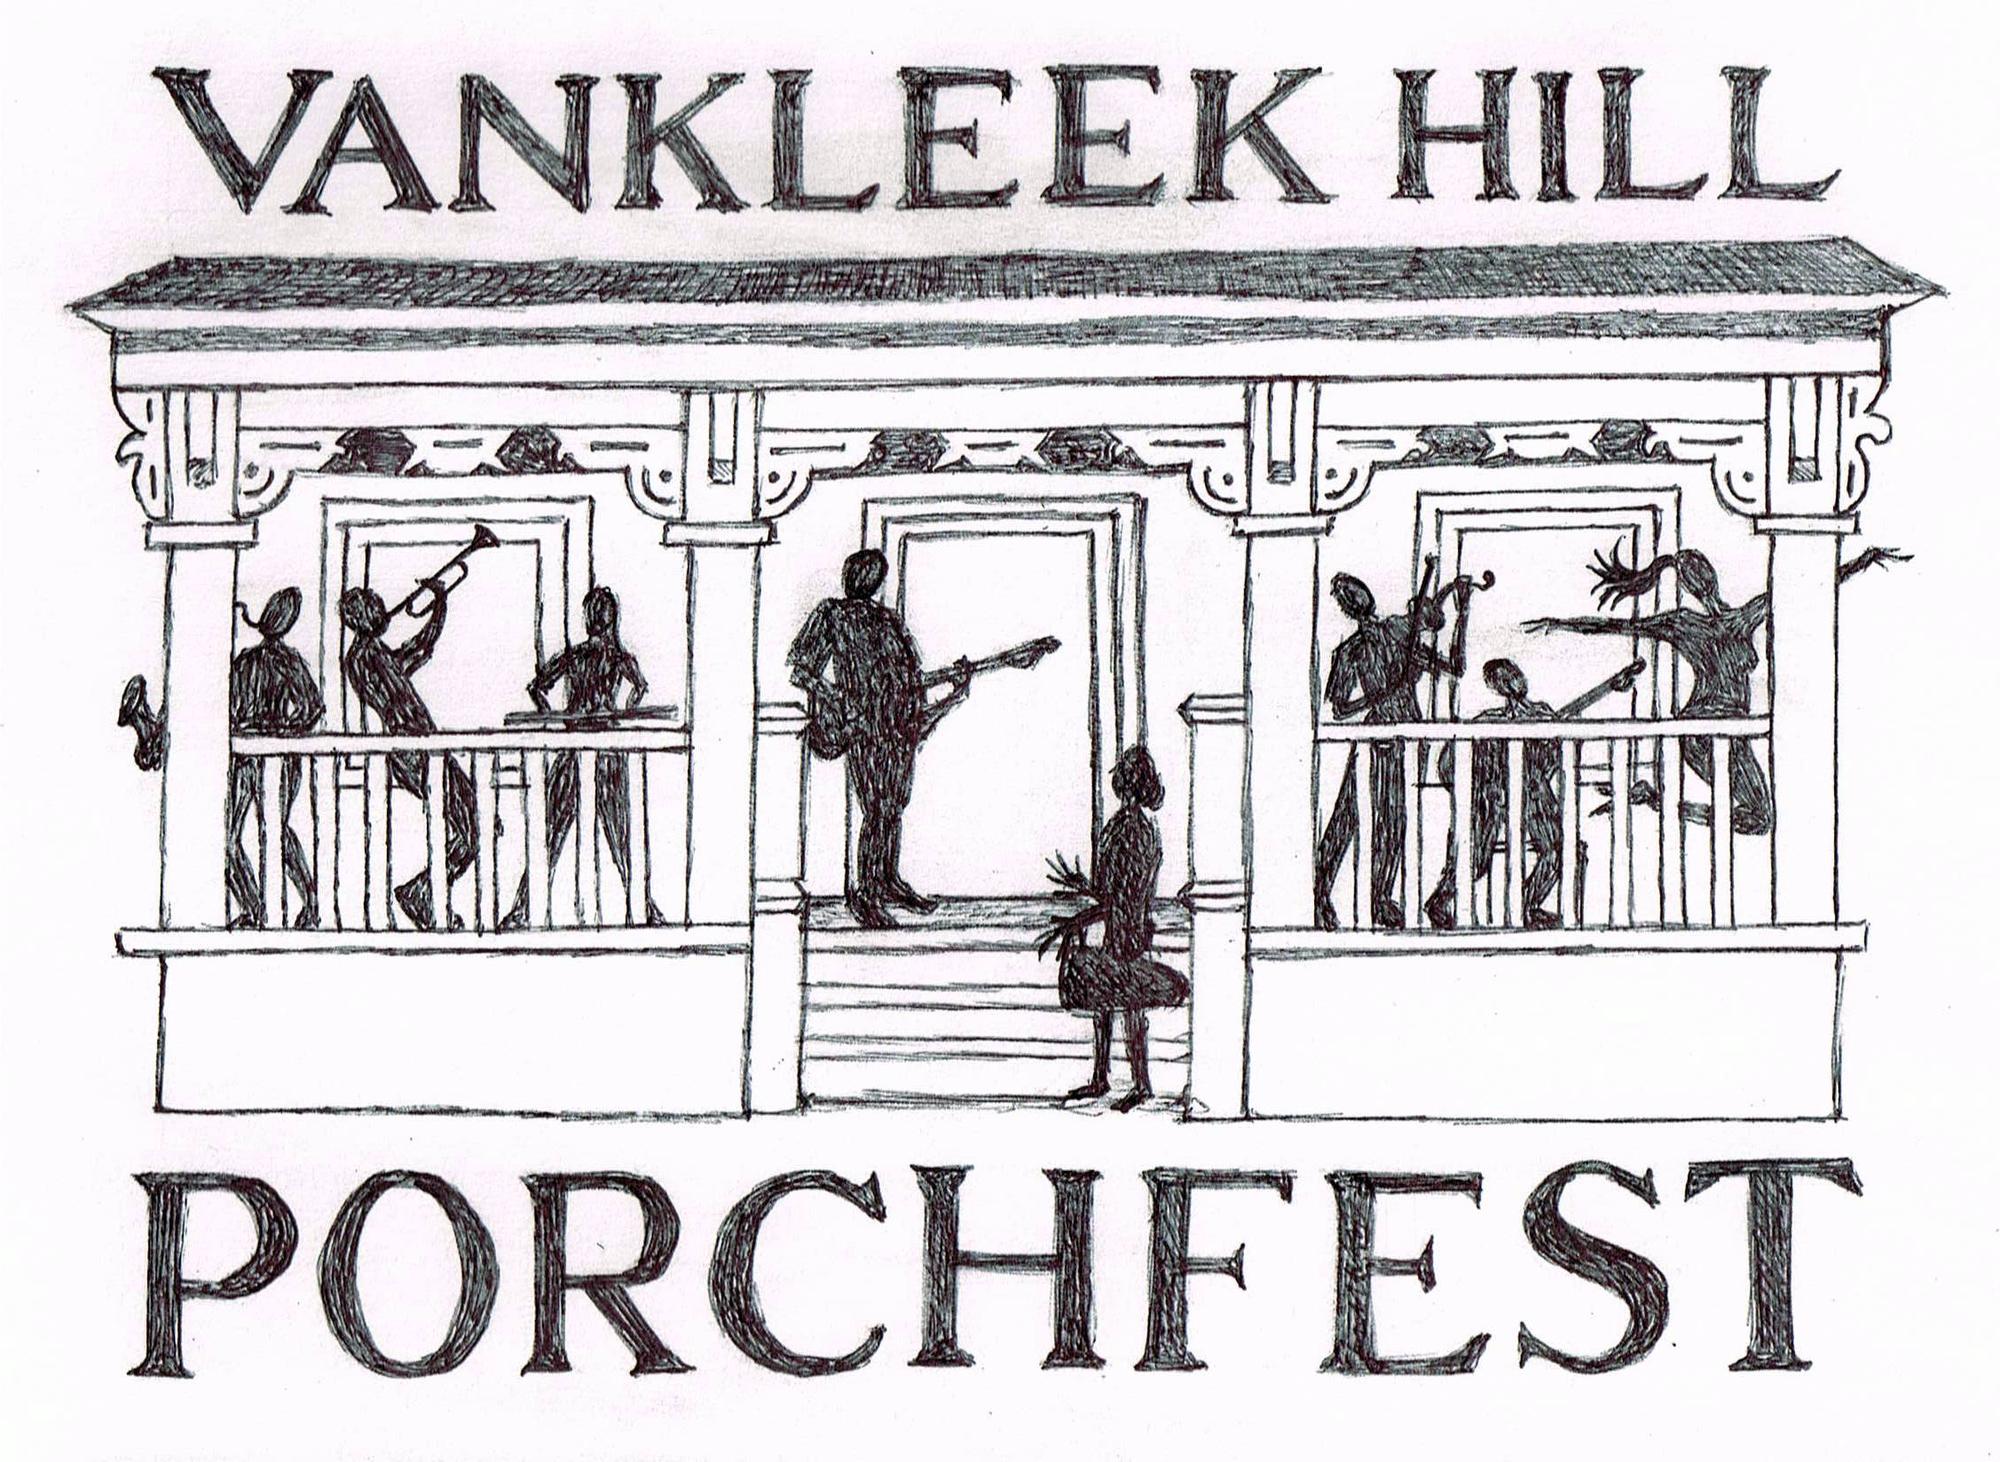 Registration open for Vankleek Hill Porchfest 2018